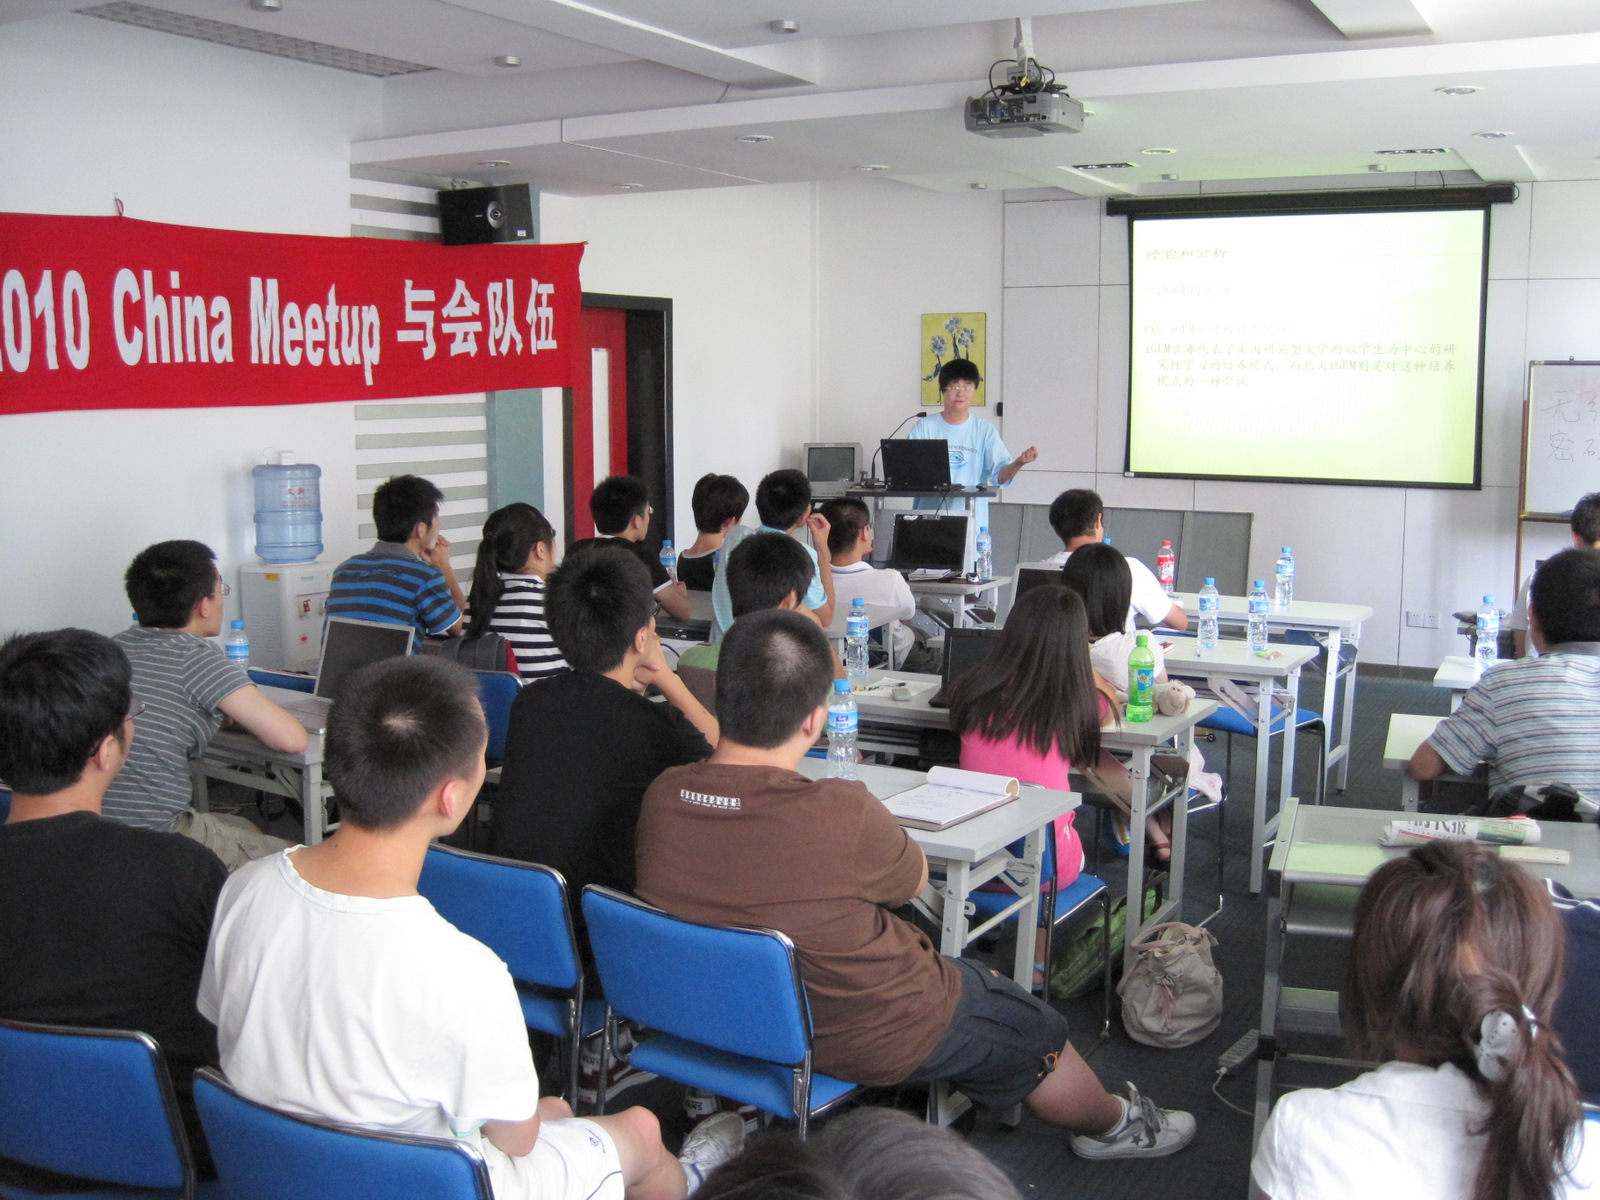 2010-China-Meetup-2.jpg